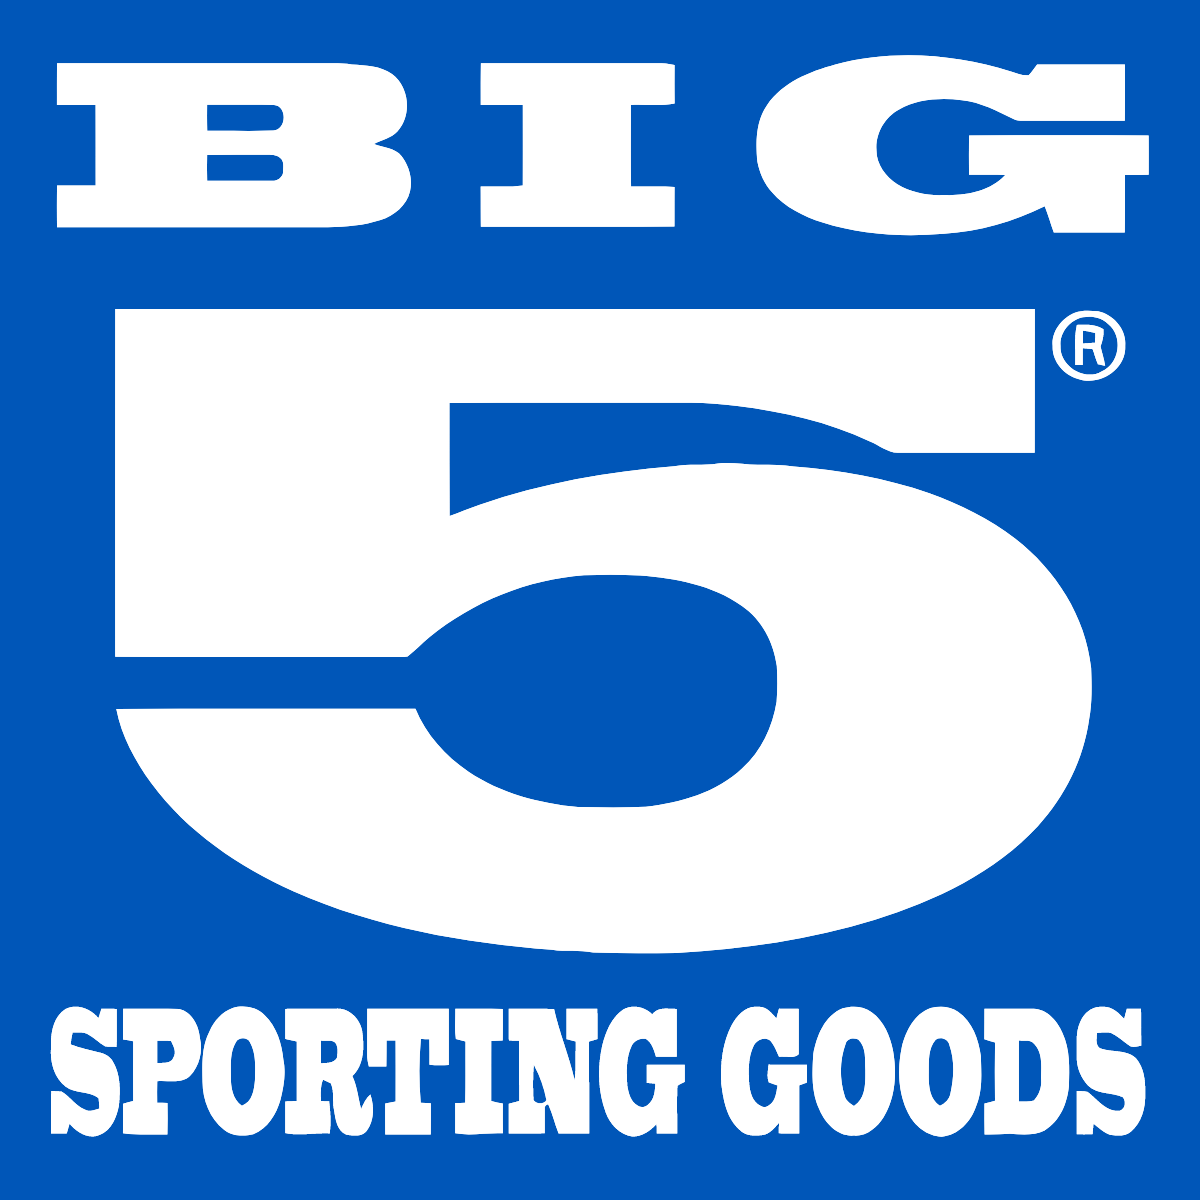 Big 5 sports. 5 Sport logo.